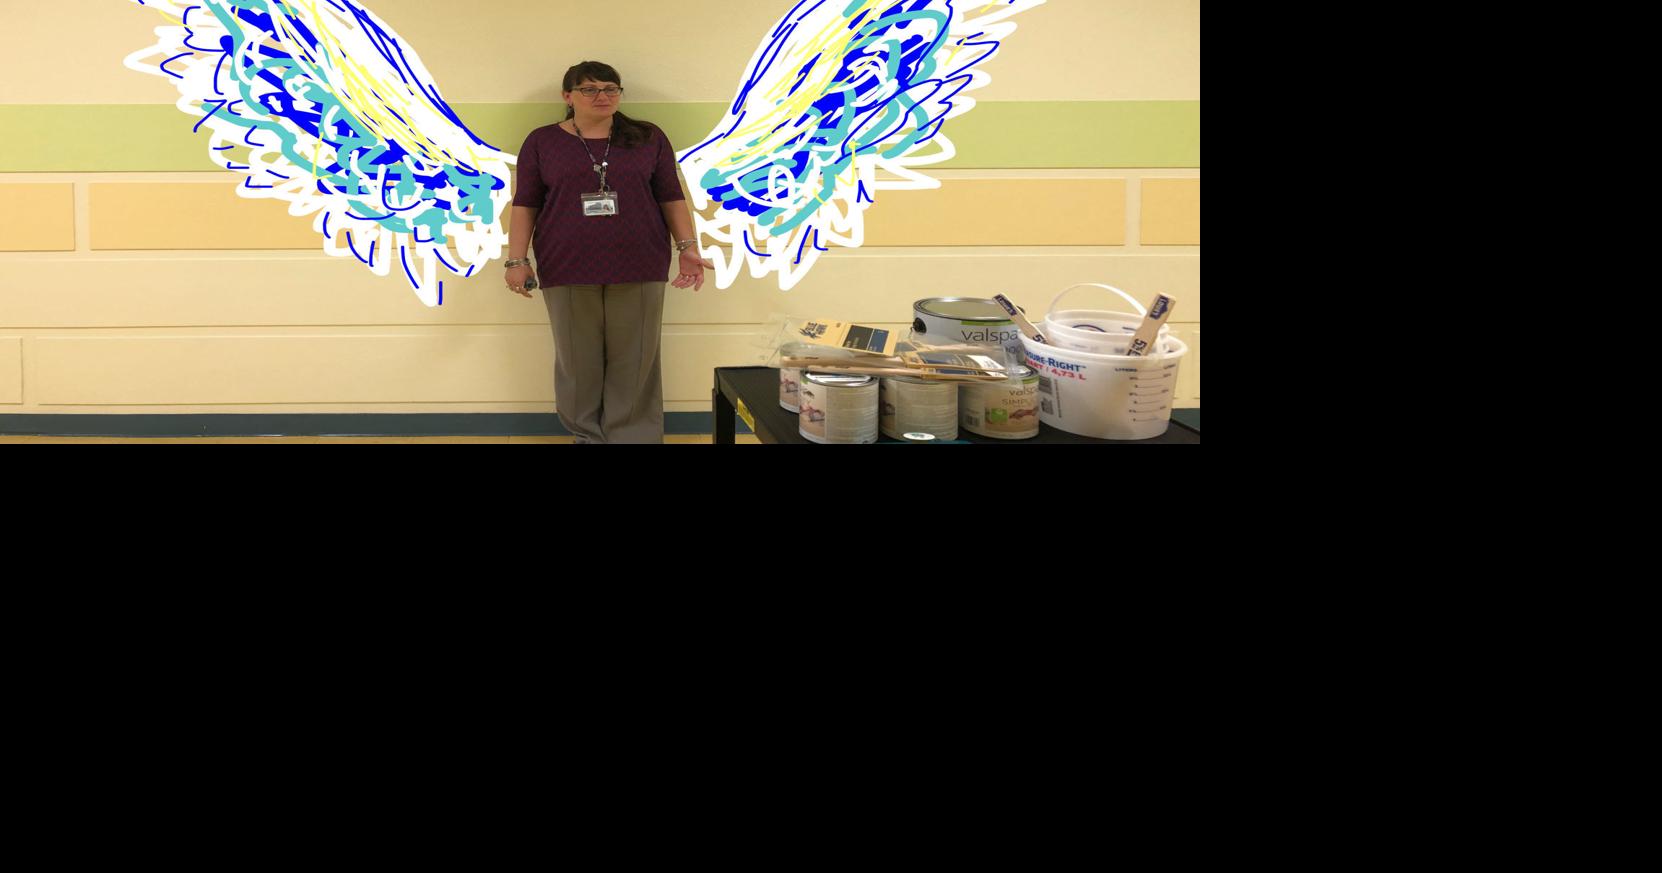 Taking flight: Local artist creates 'selfie wings' for schools' alternative